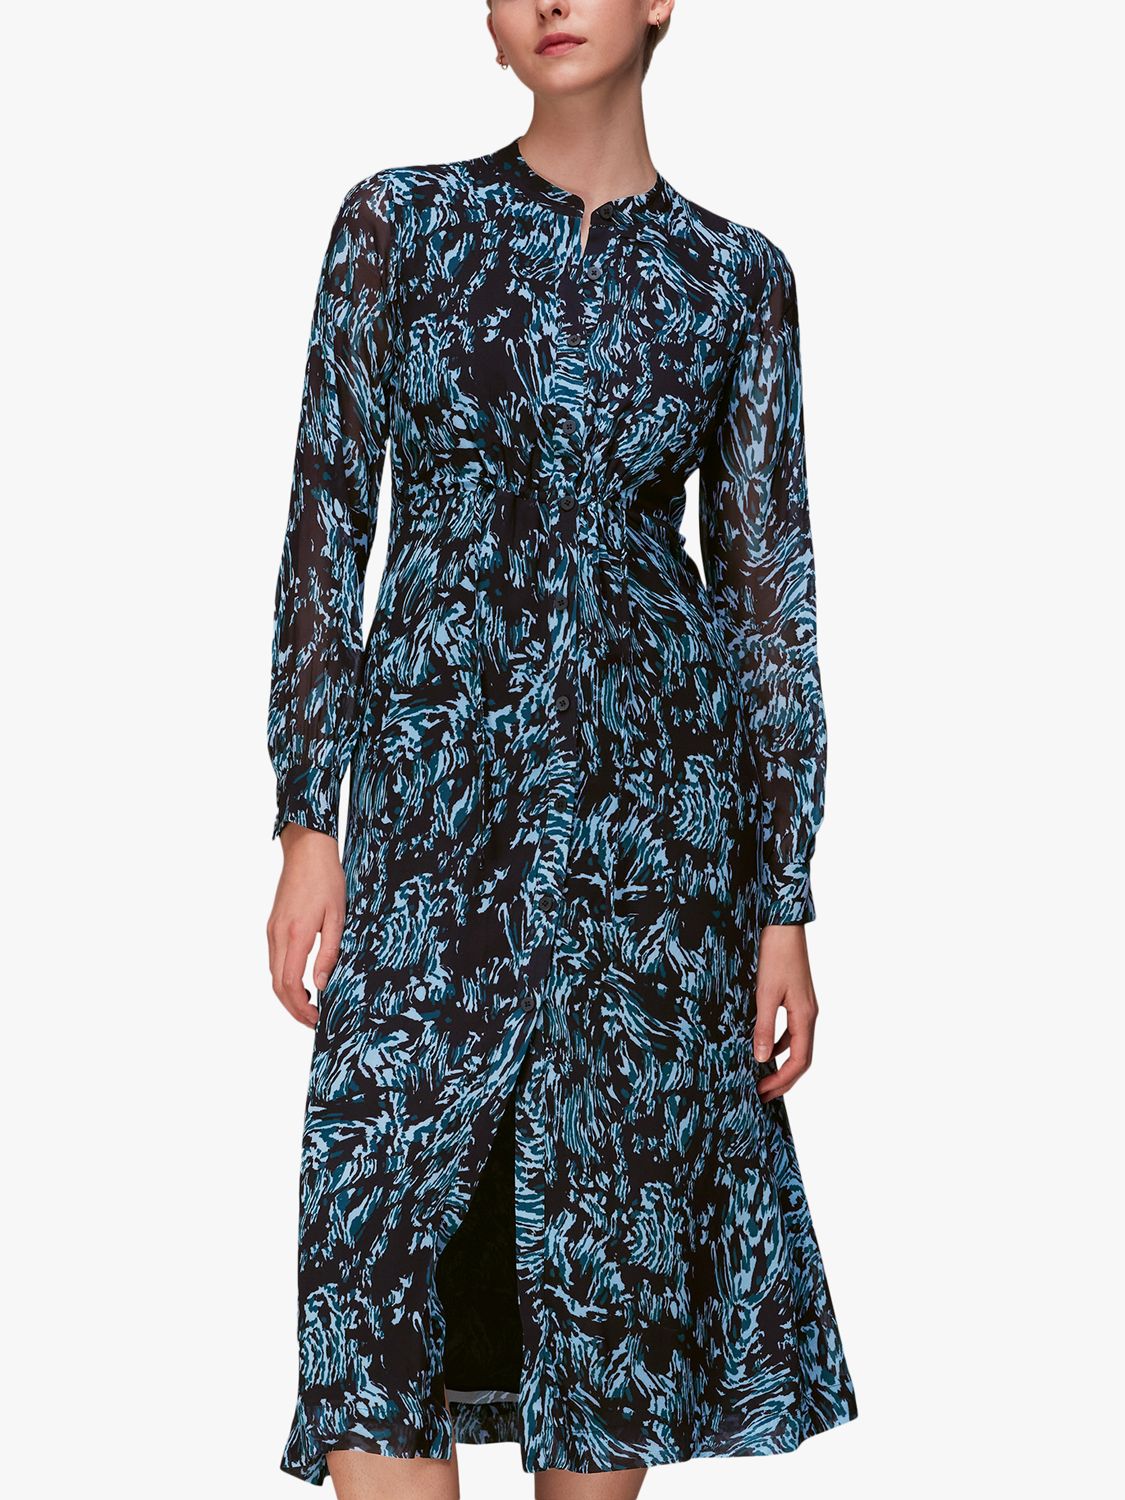 Whistles Wood Tiger Print Midi Dress, Blue/Multi at John Lewis & Partners